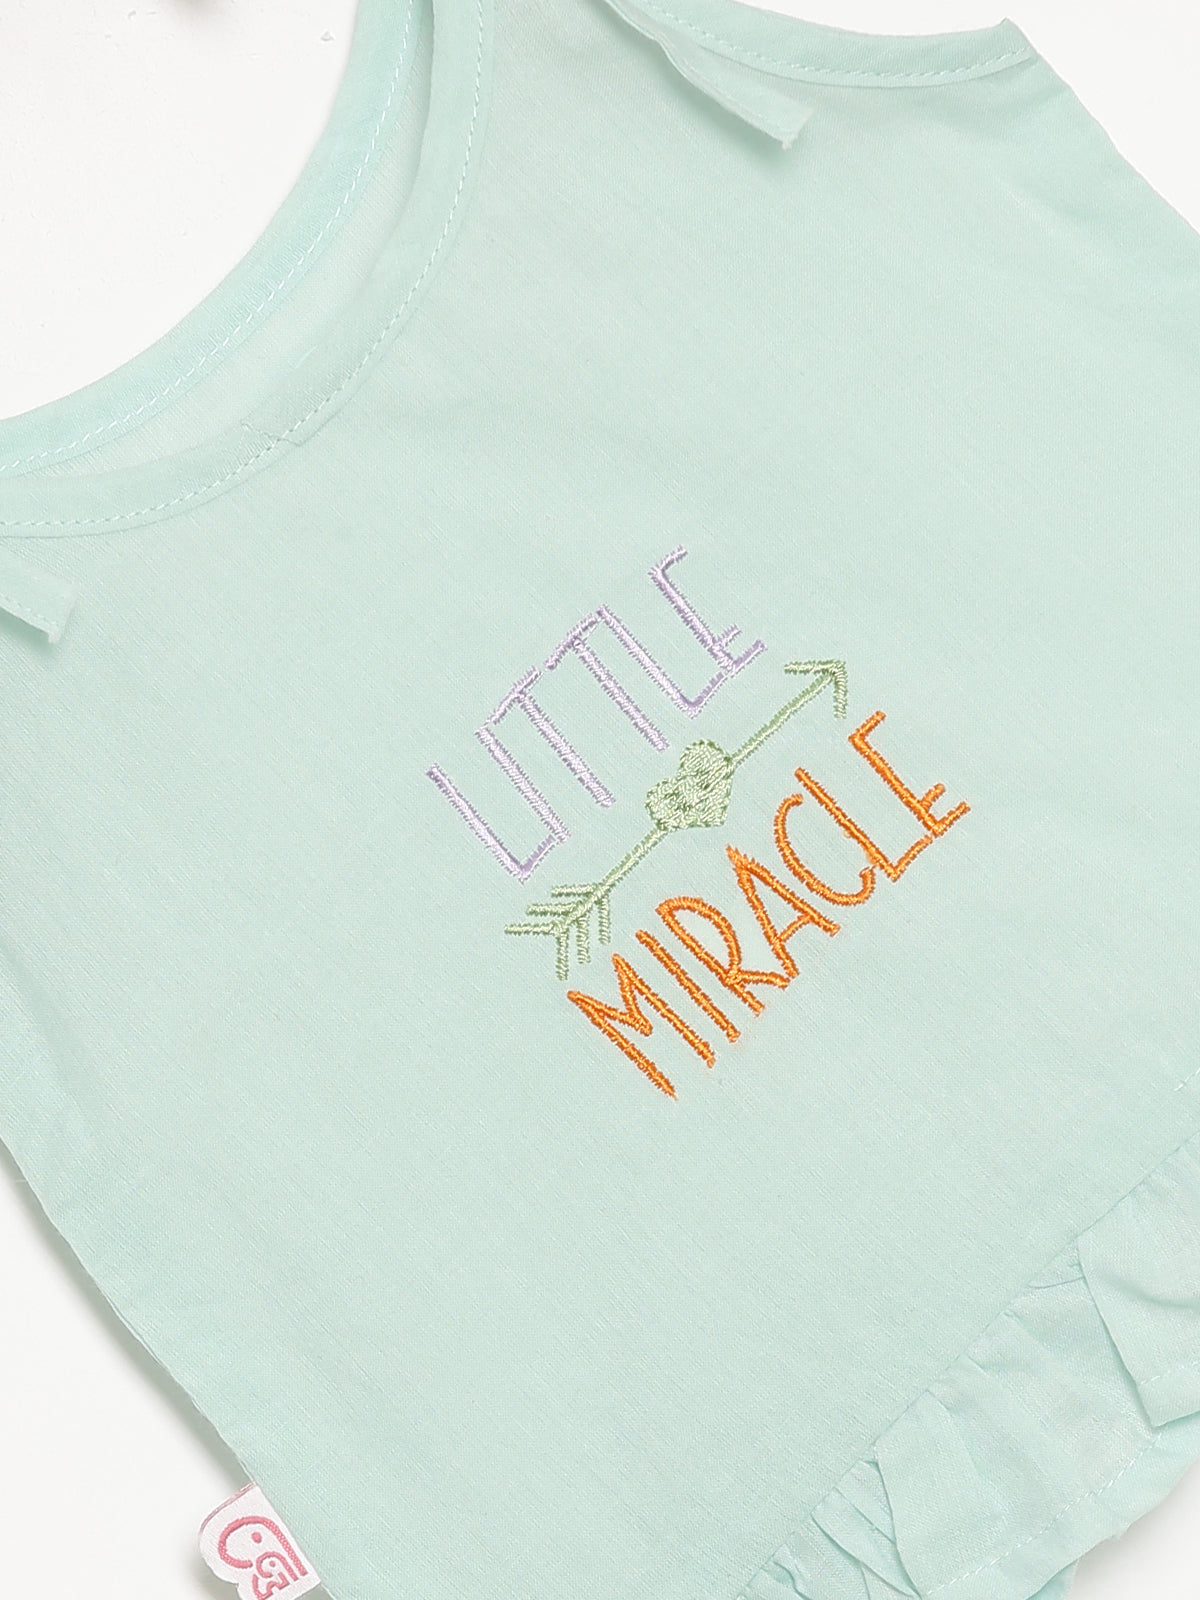 Oh Baby Little Miracle Sleeveless Shirt - KV03